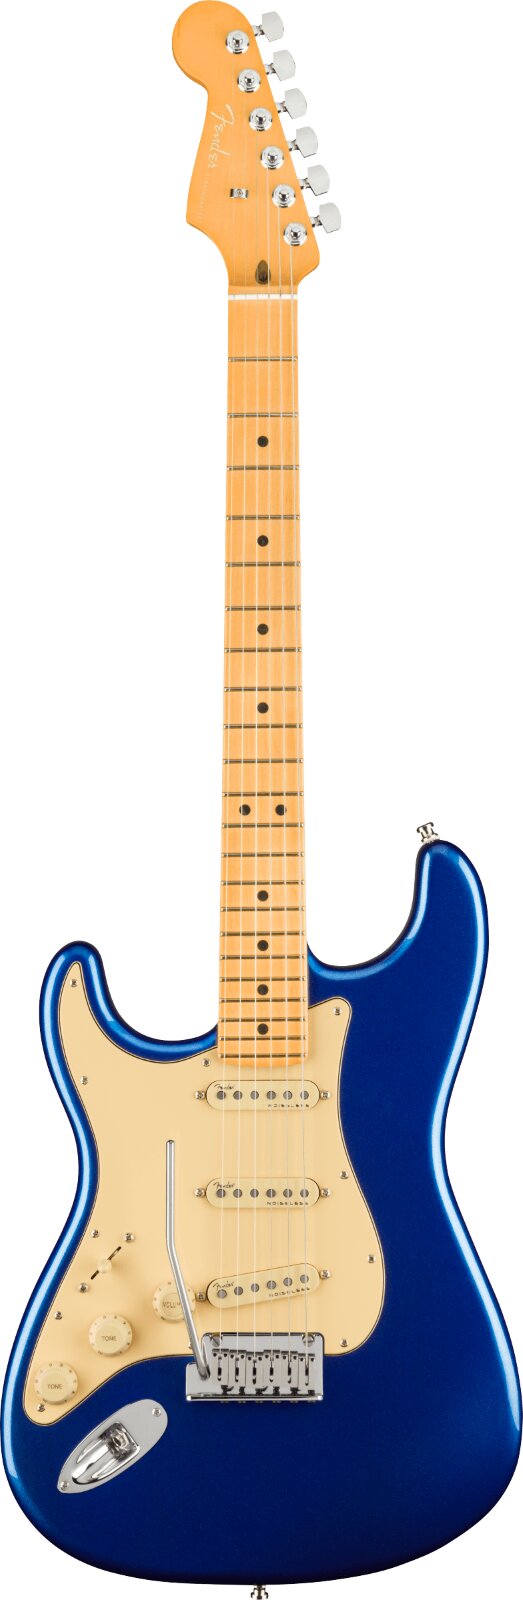 Fender American Ultra Stratocaster Left-Hand Ahorngriffbrett Cobra Blue : photo 1